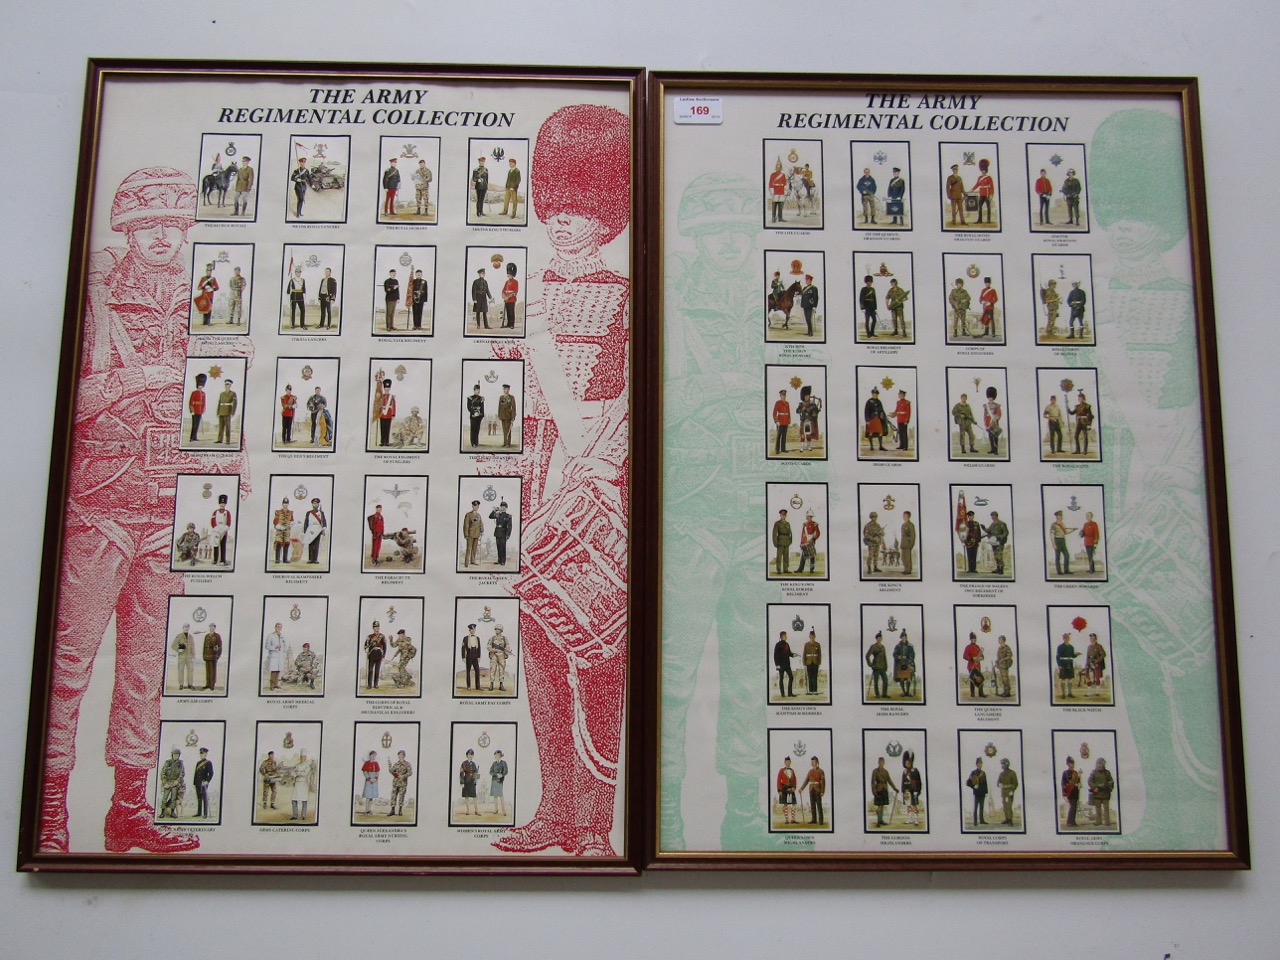 Two framed sets of Army Regimental uniform study cards